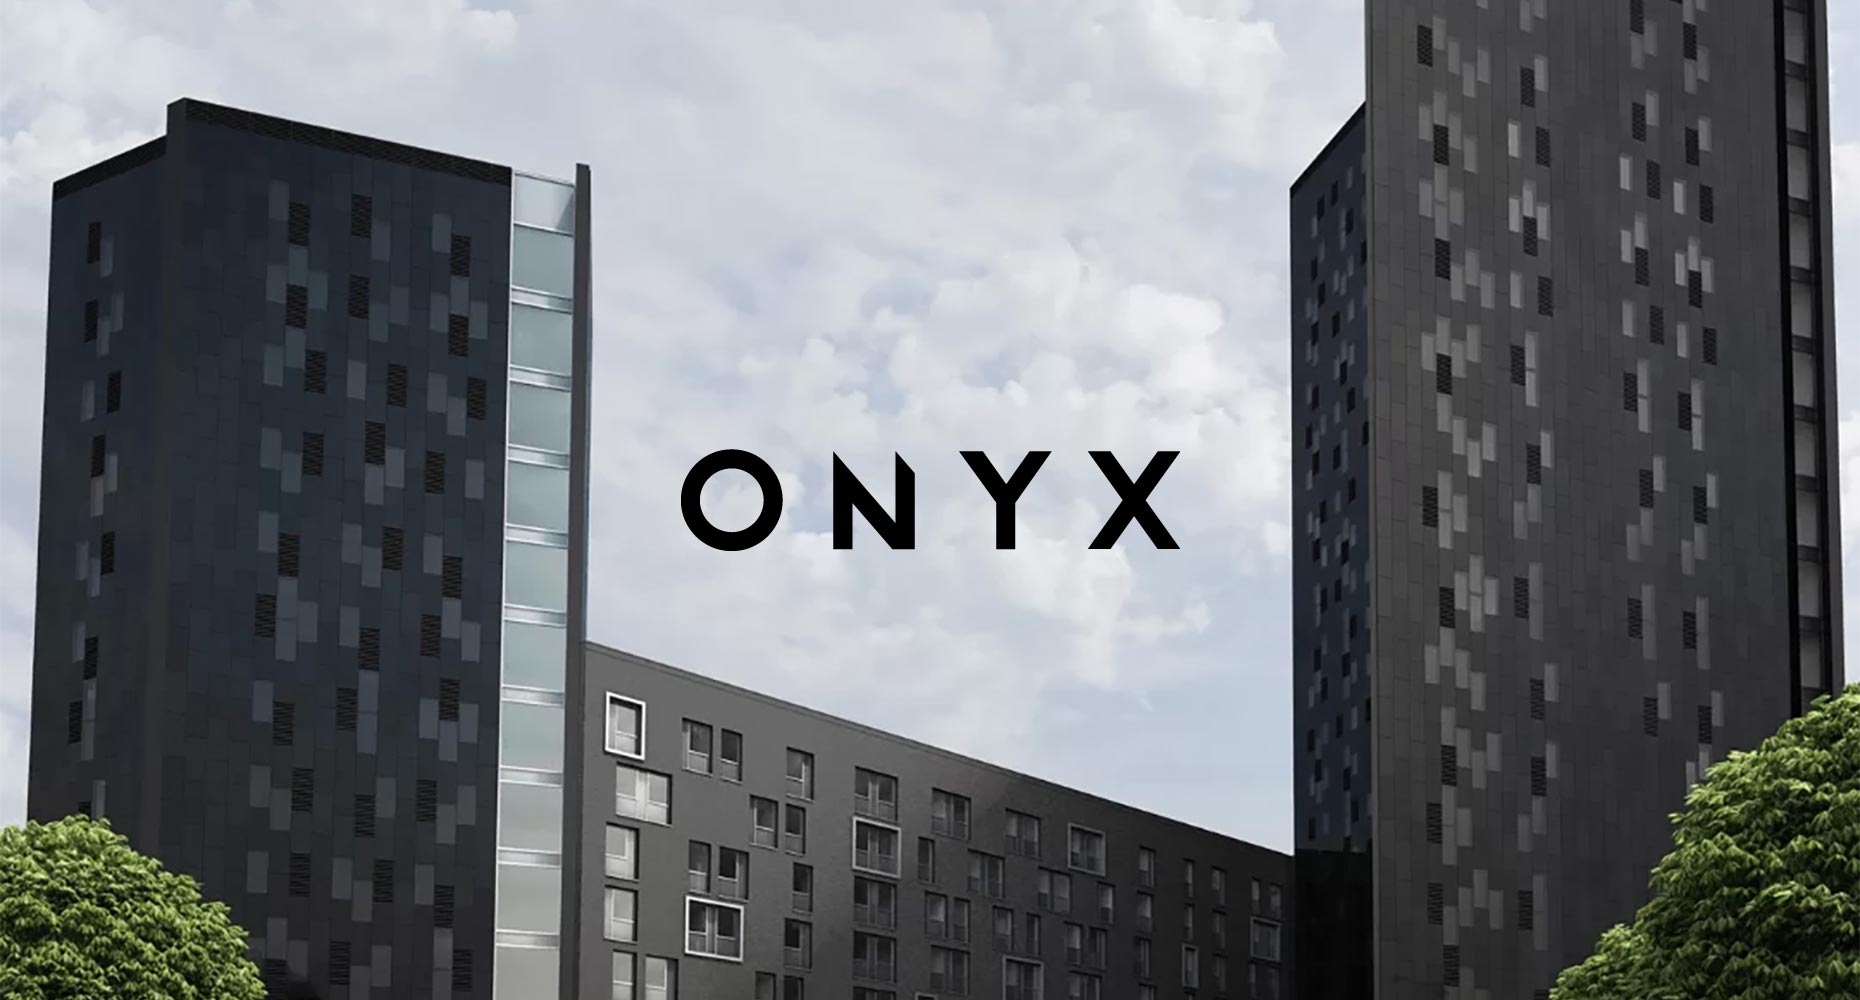 Onyx Birmingham